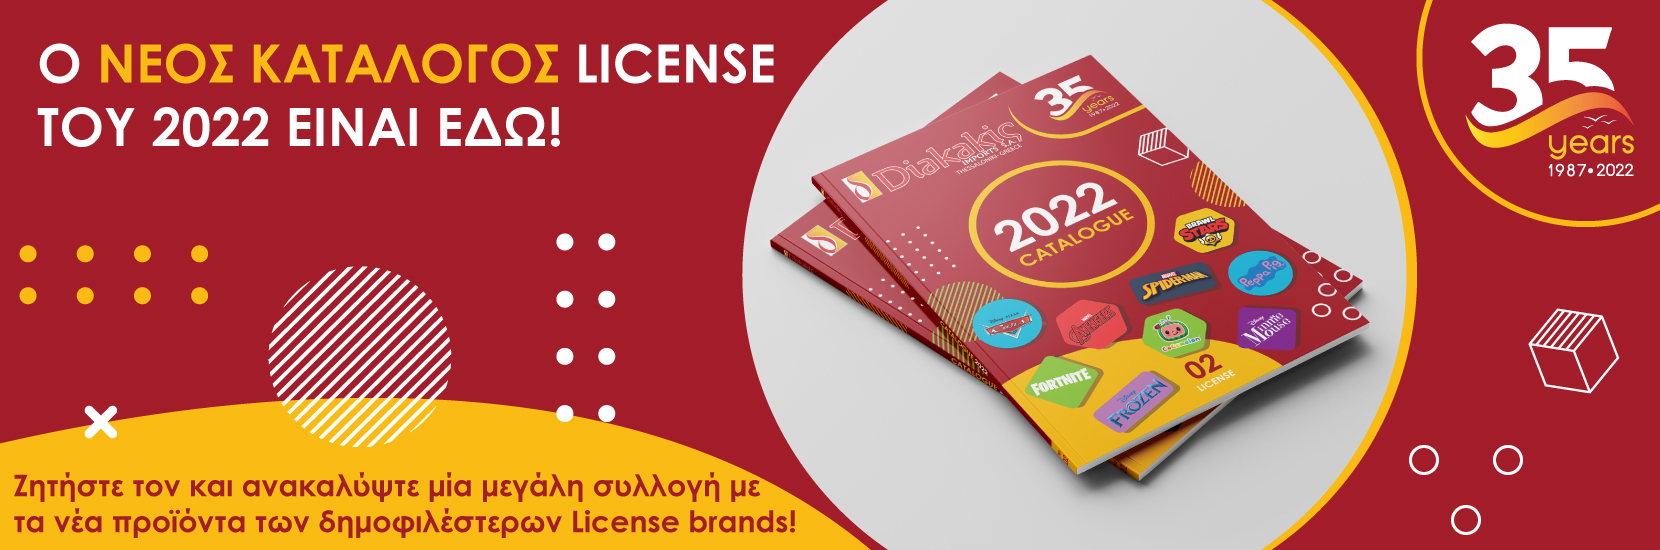 Catalogue License 2022